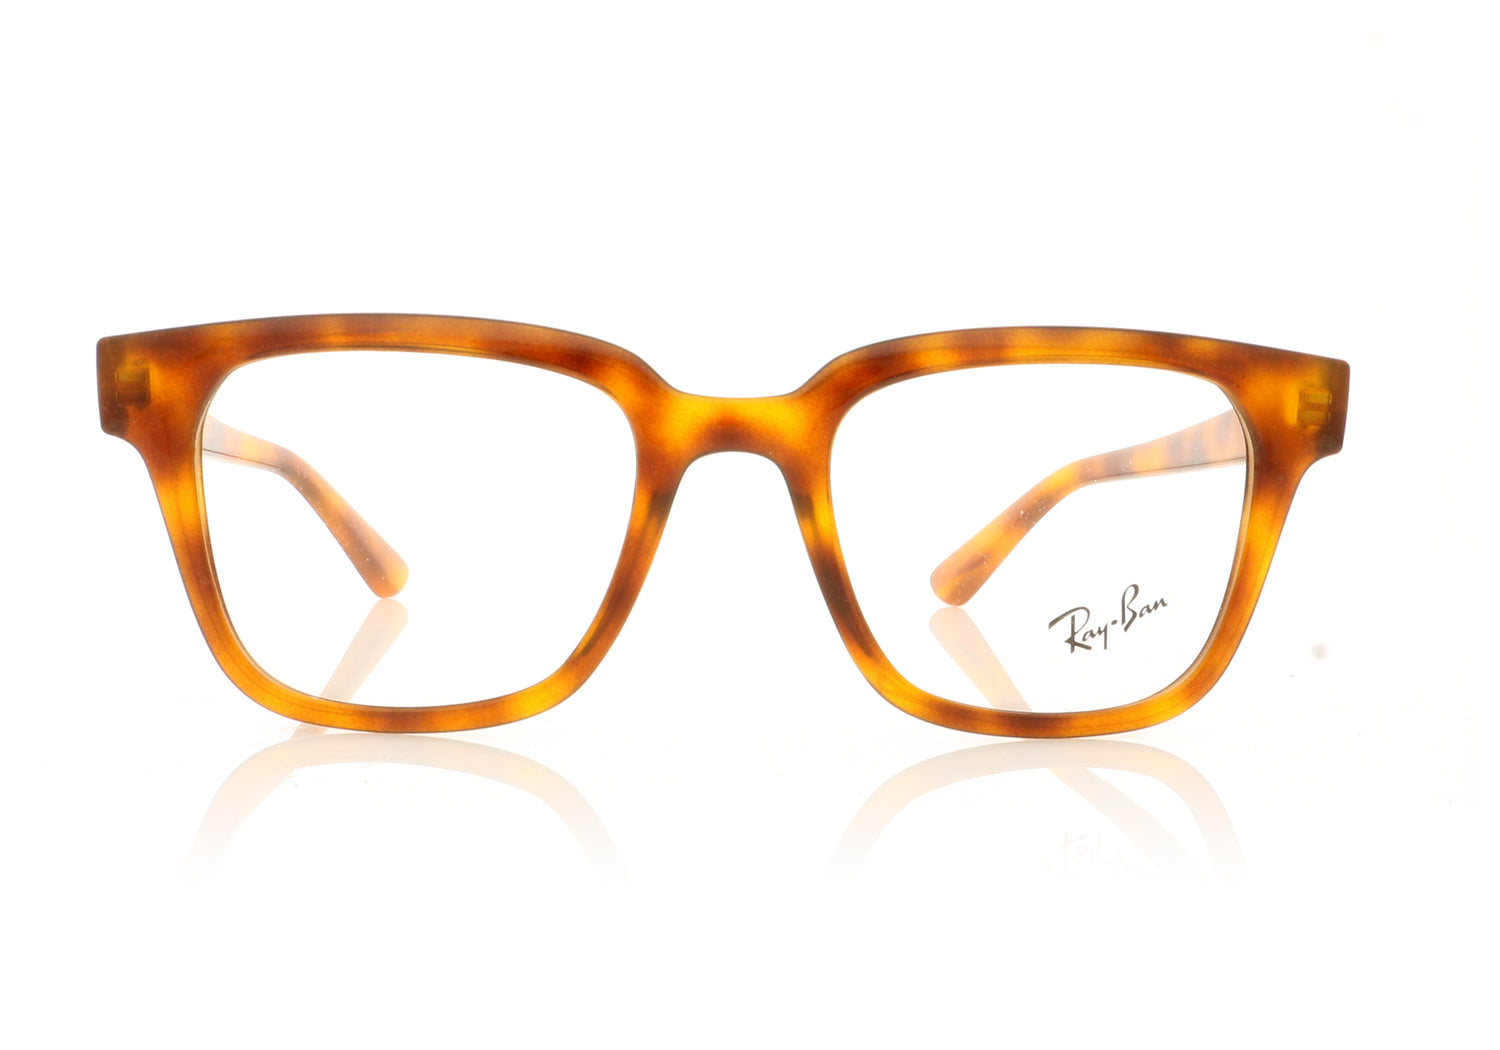 Ray-Ban RB4323 5977 Yellow Light Havana Glasses - Front